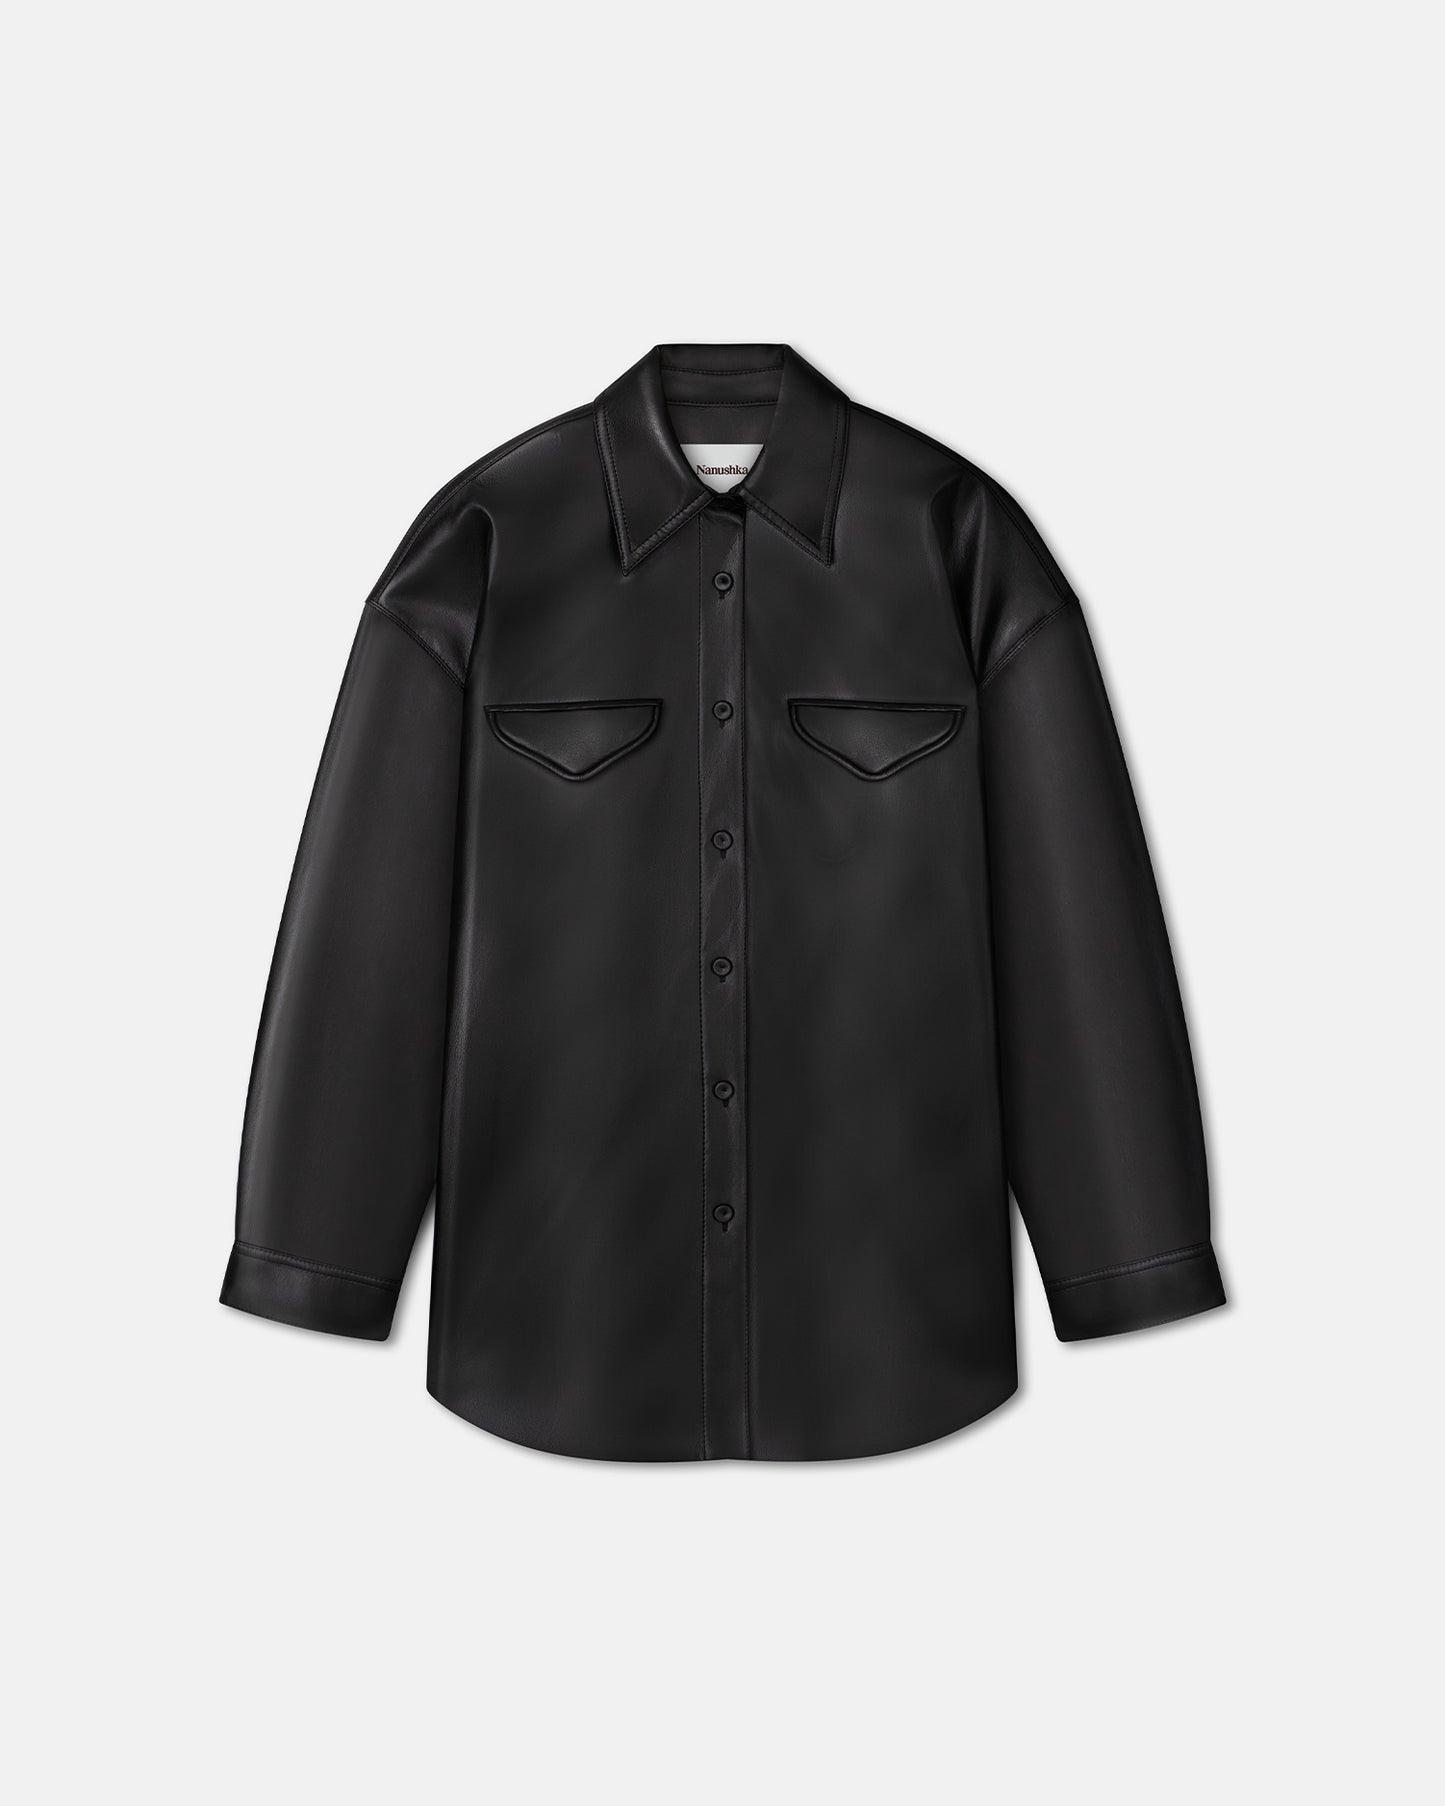 Kaysa - Okobor™ Alt-Leather Shirt - Black